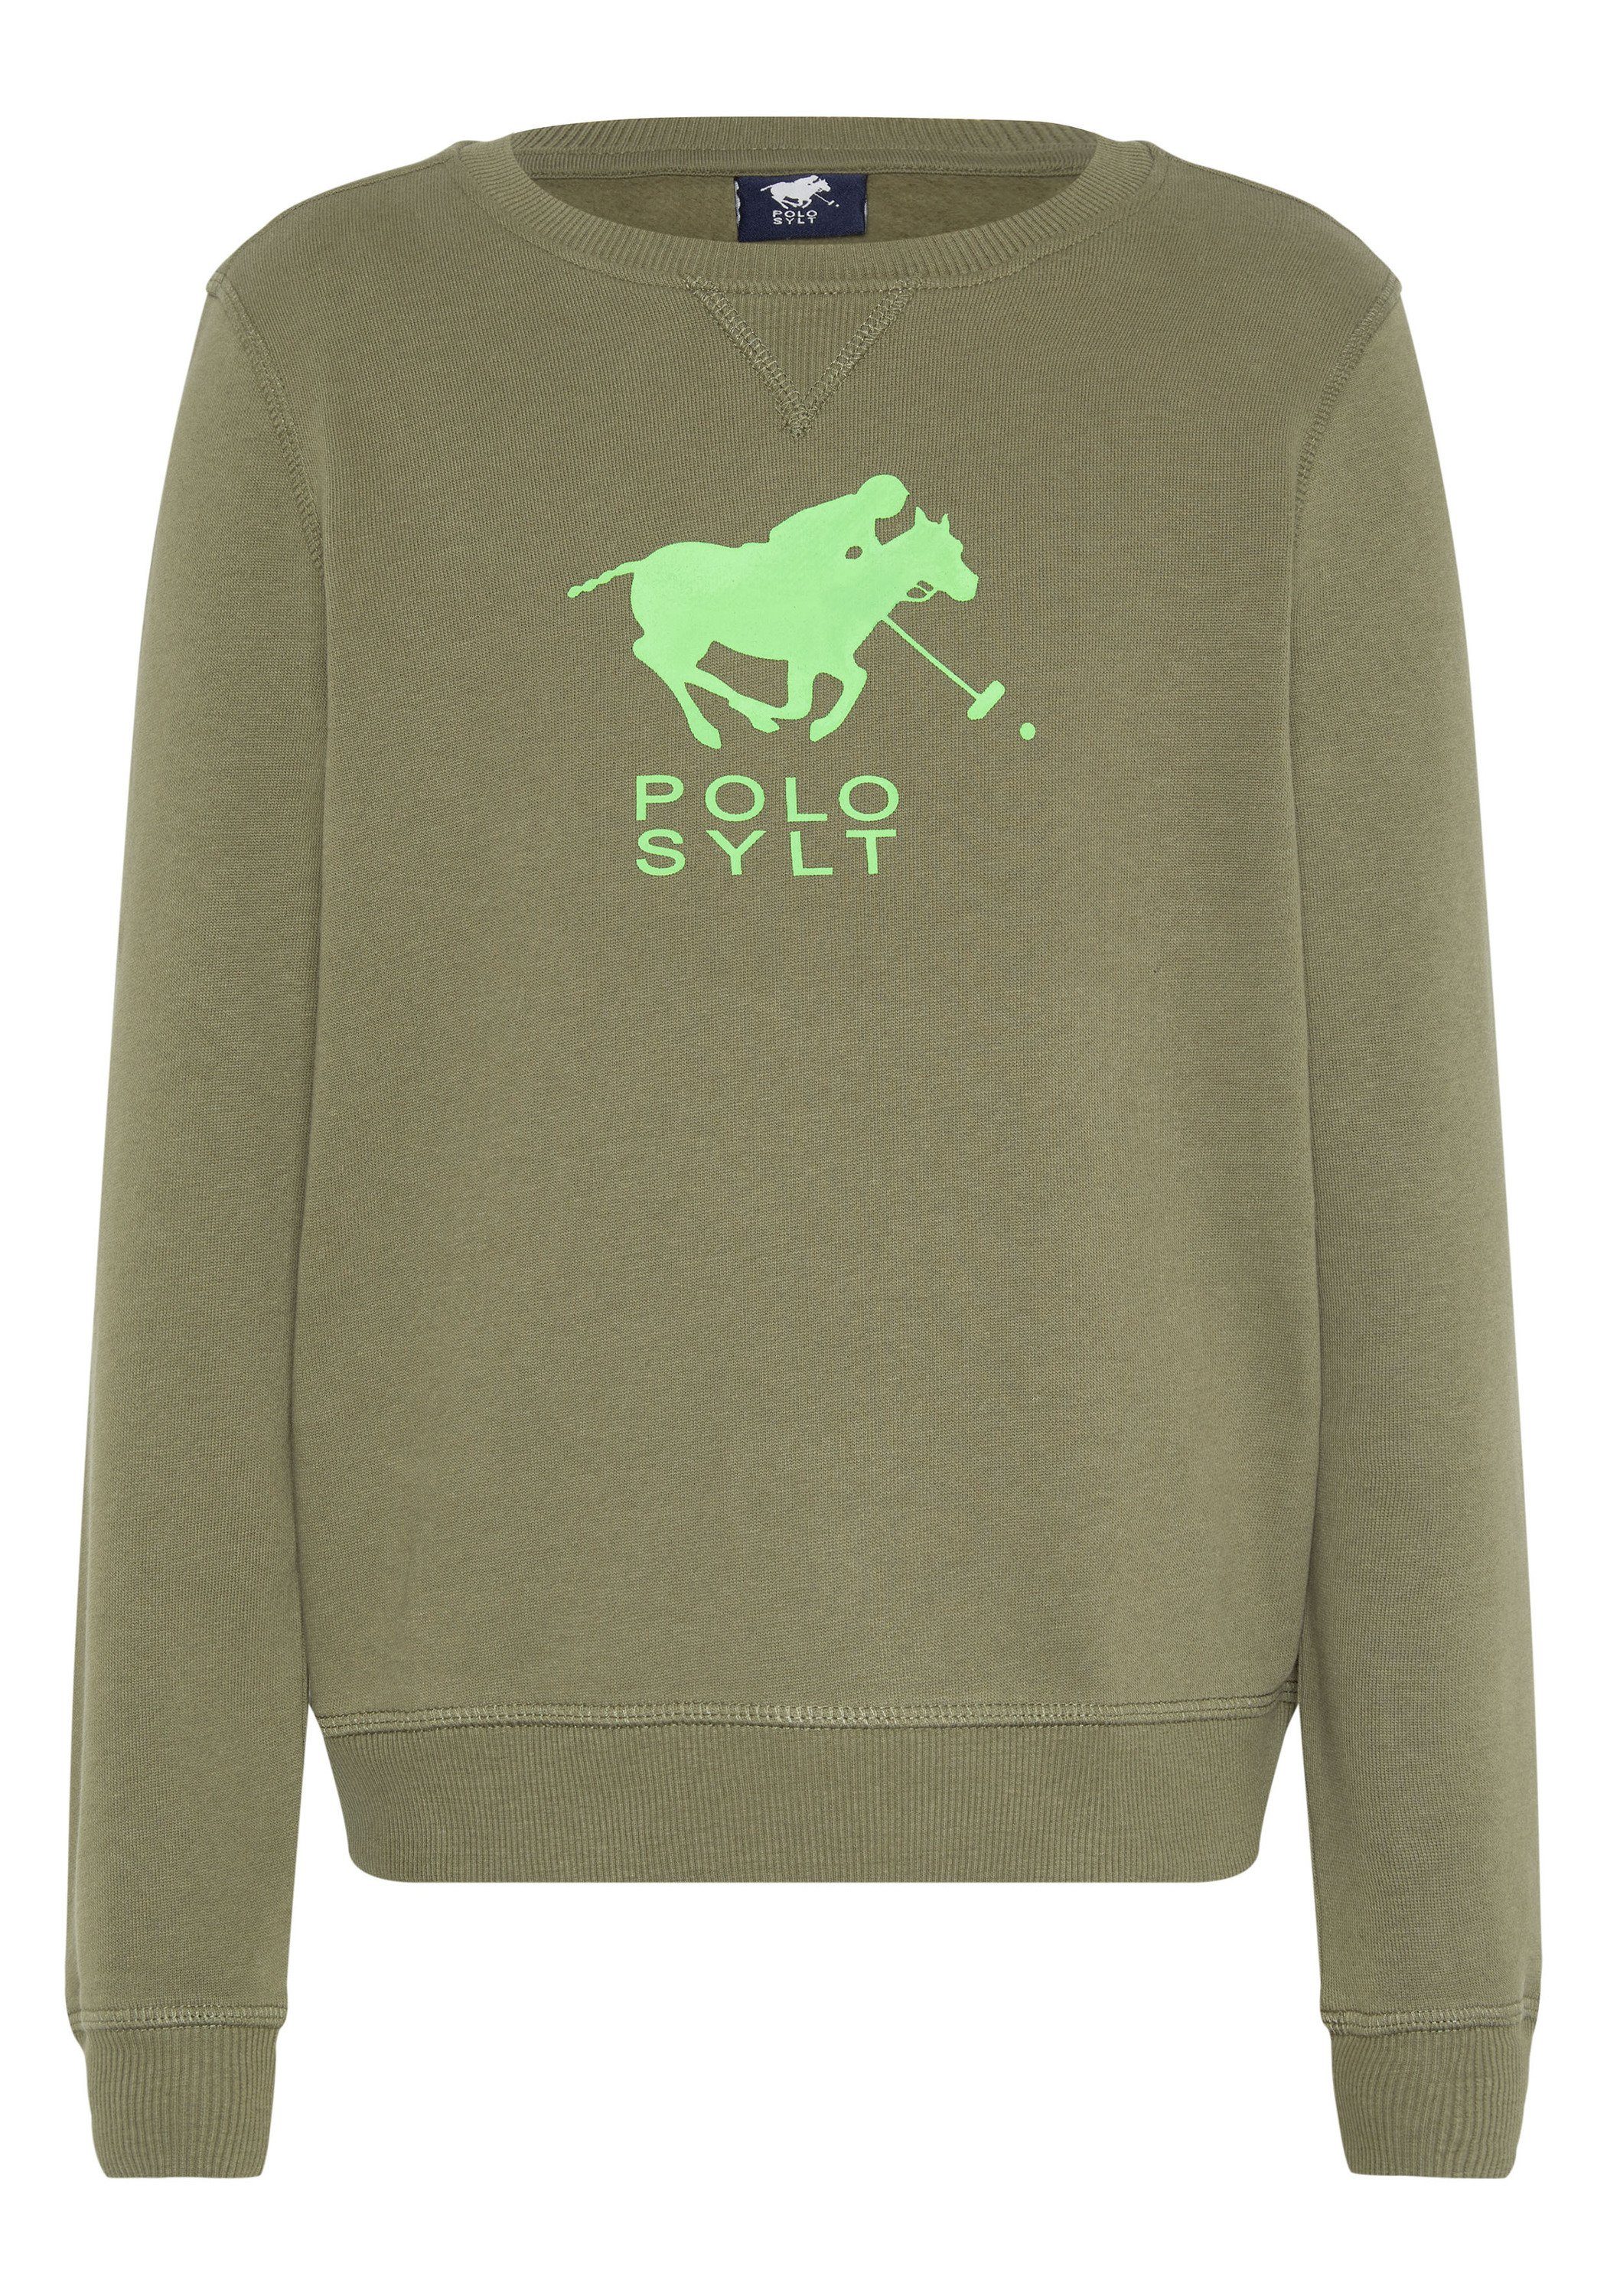 Polo Sylt Sweatshirt mit Label-Print 18-0521 Burnt Olive